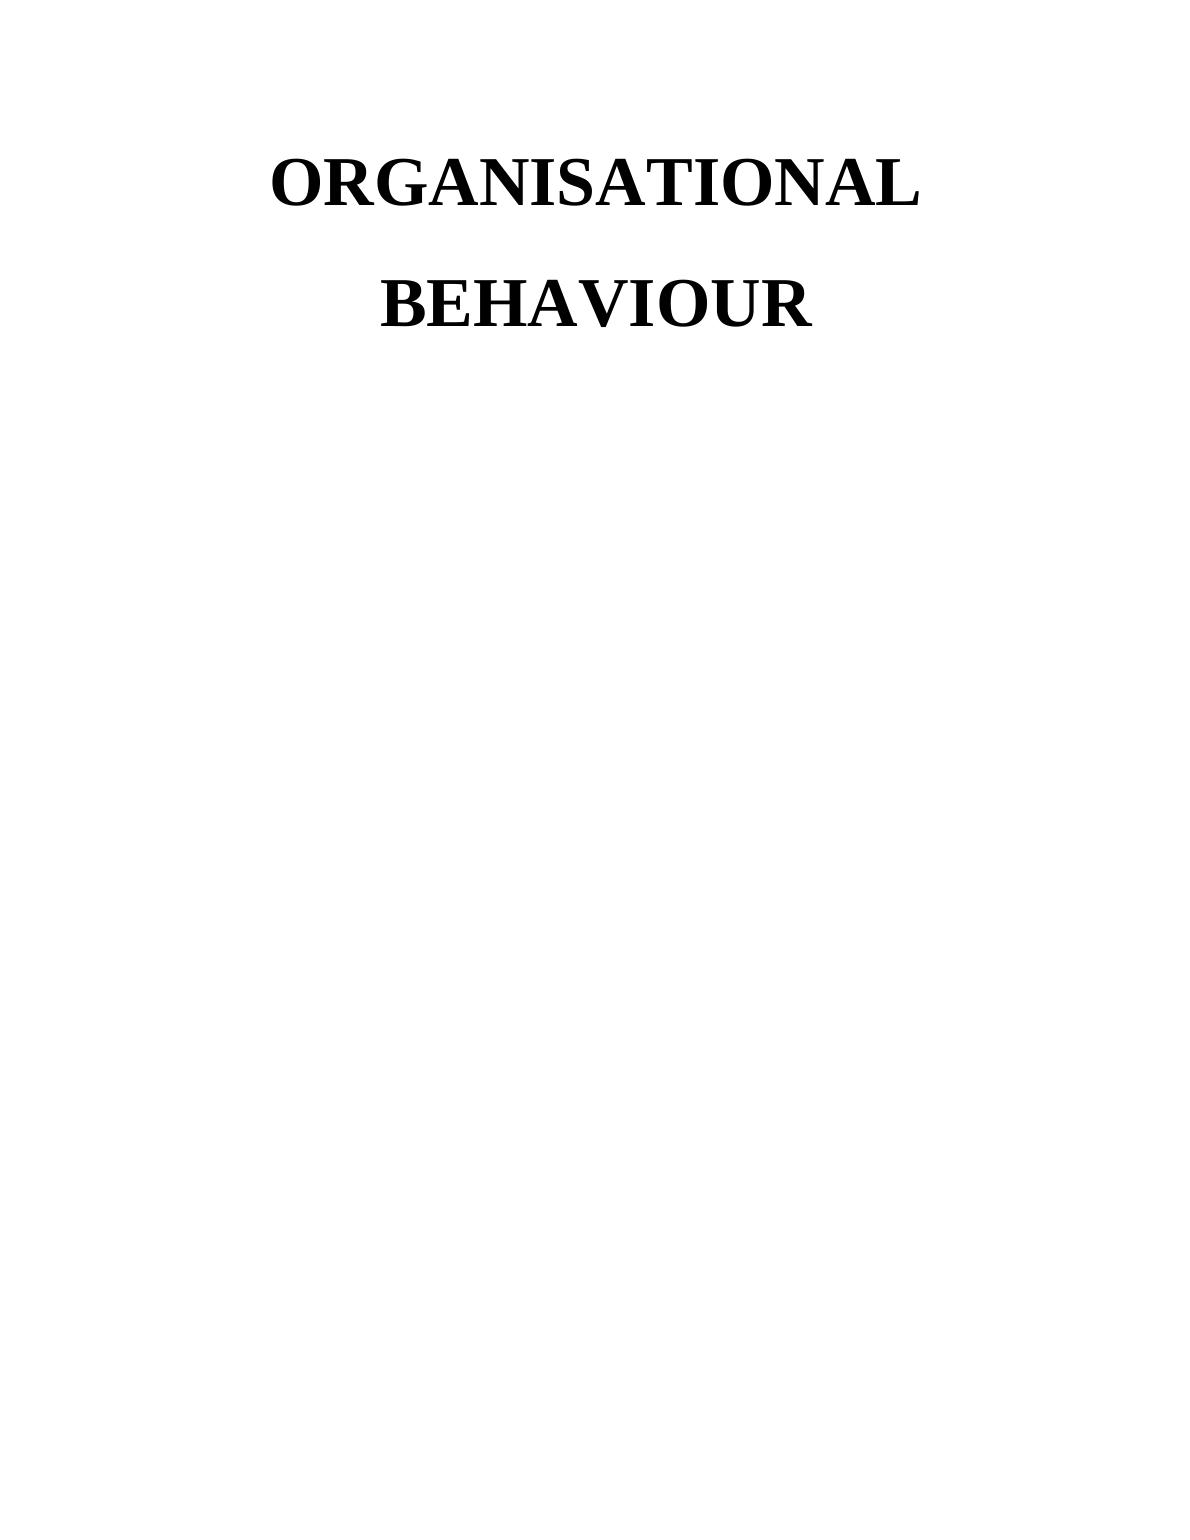 Organisational Behaviour Assignment - BBC case study_1